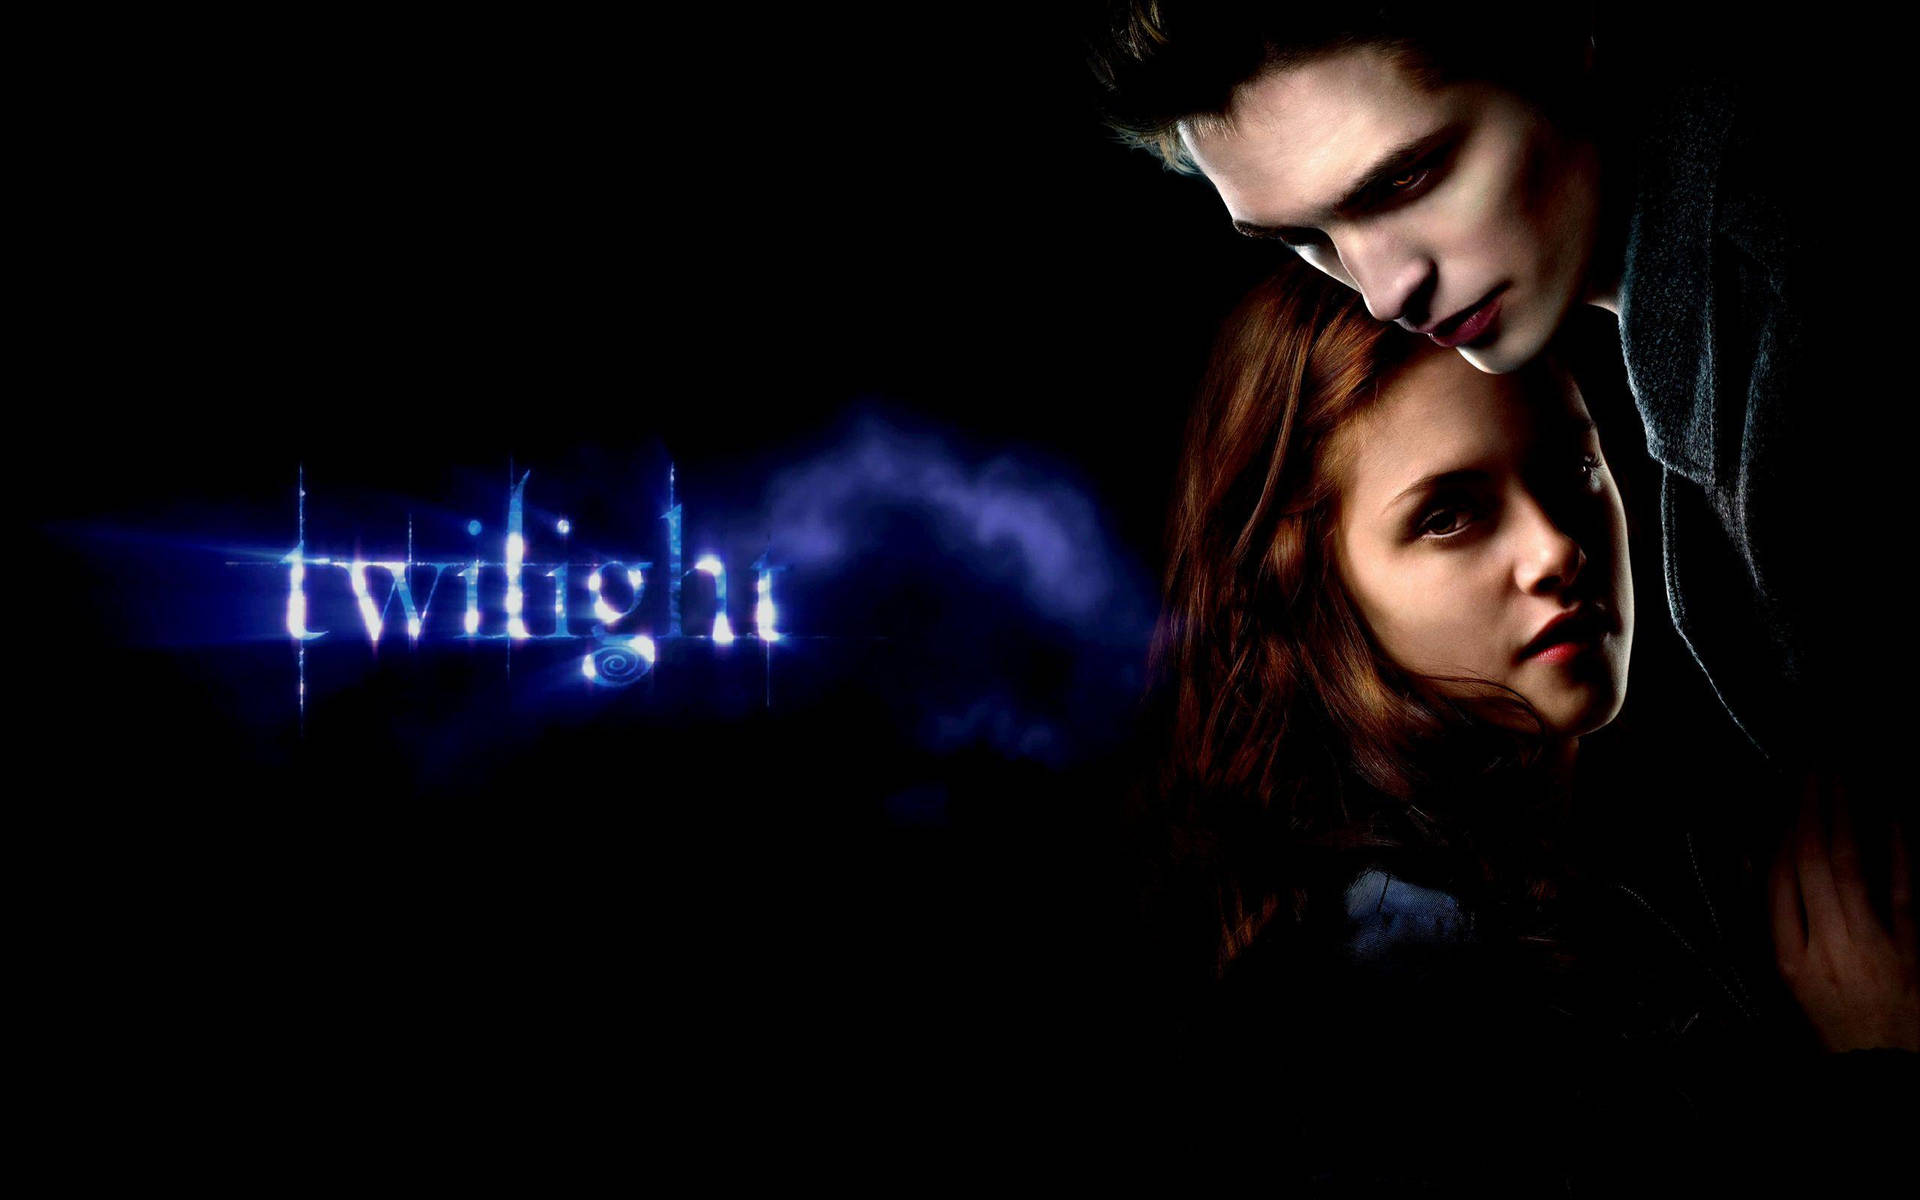 The Twilight Saga Title Poster Background